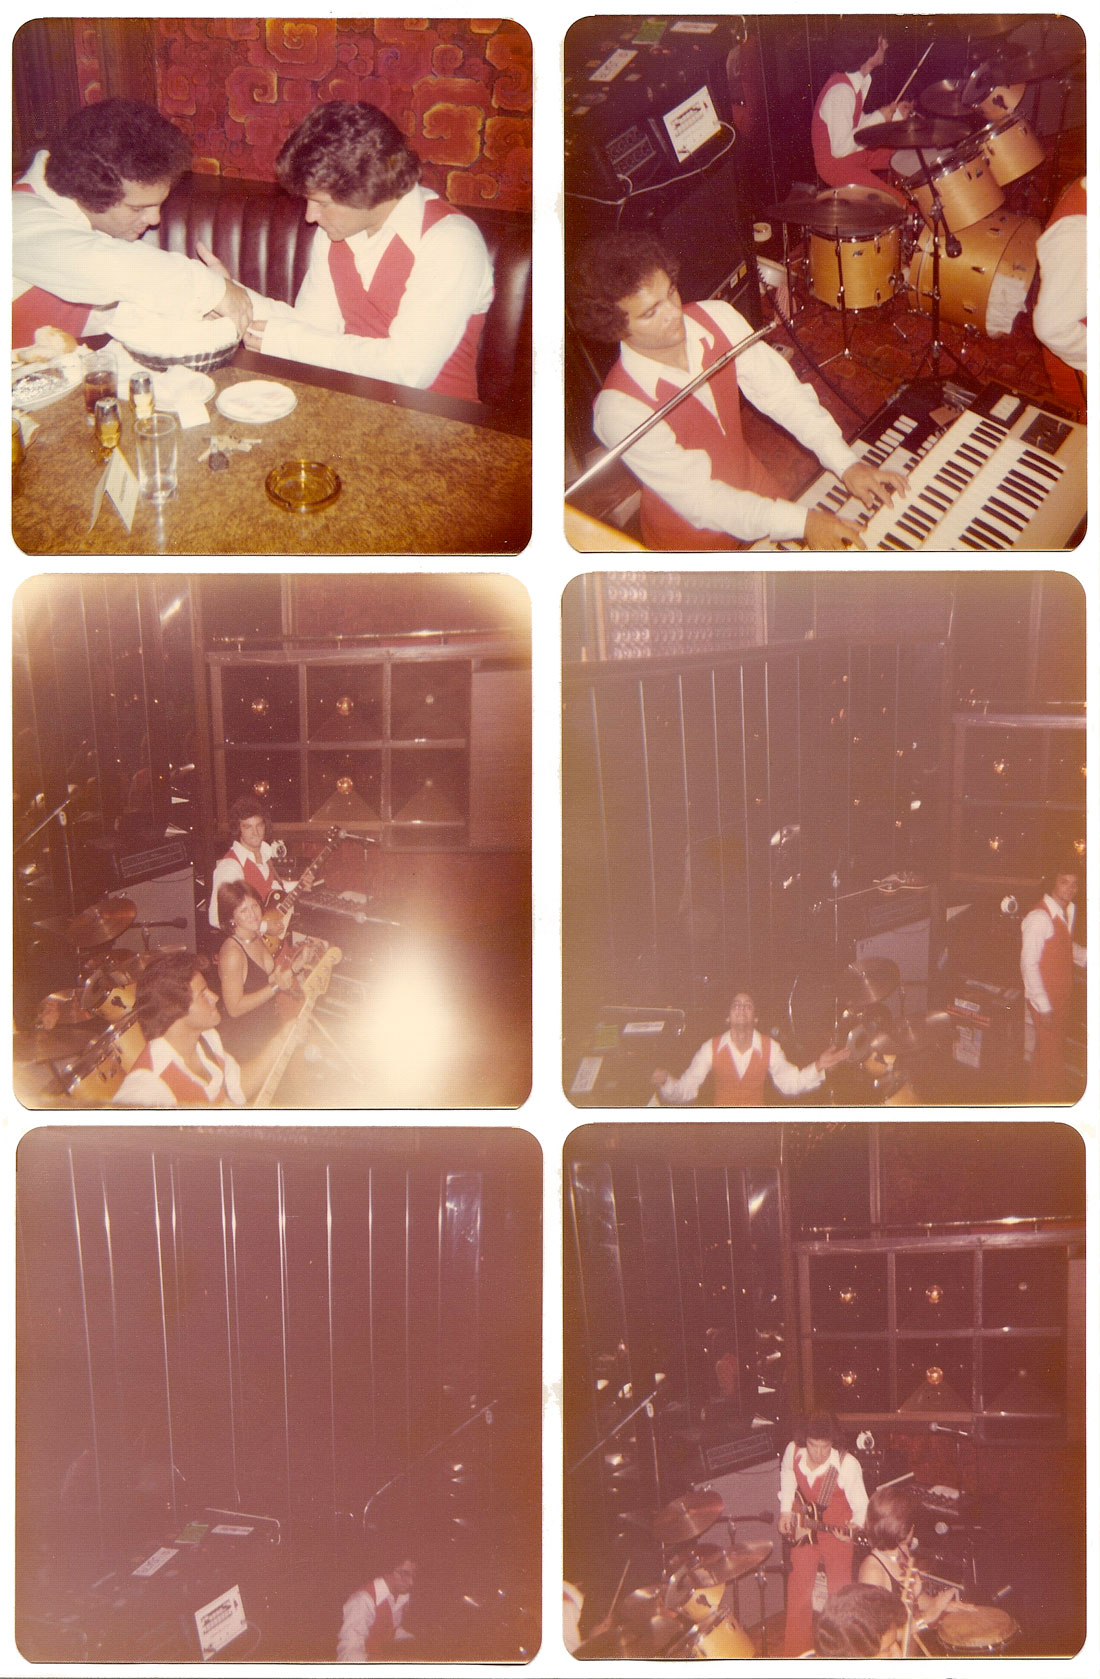 Clockwork performance at Pete & Lenny's on June 28, 1976